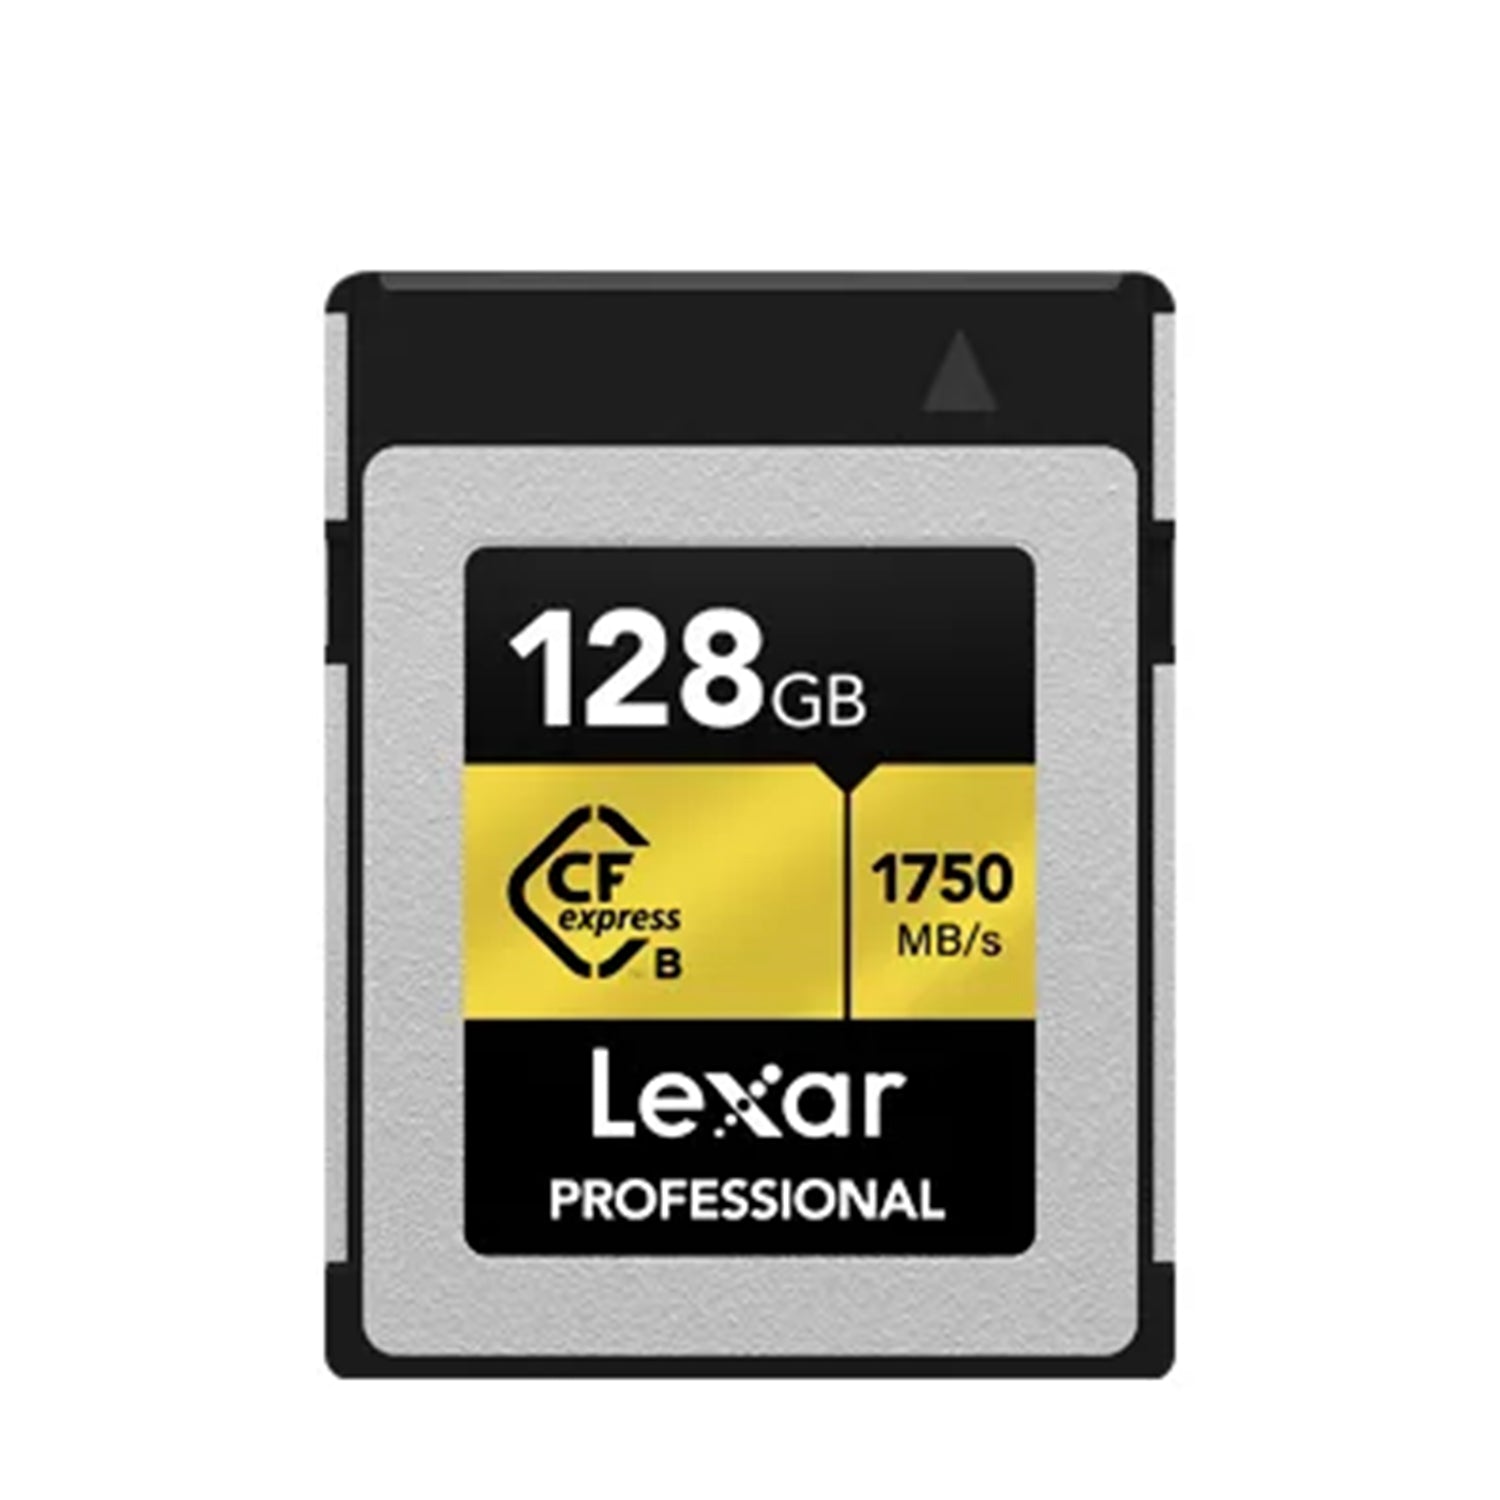 Lexar CFEXPRESS type-B 128GB Gold Hispeed - Cine Sud è da 48 anni sul mercato! 933032